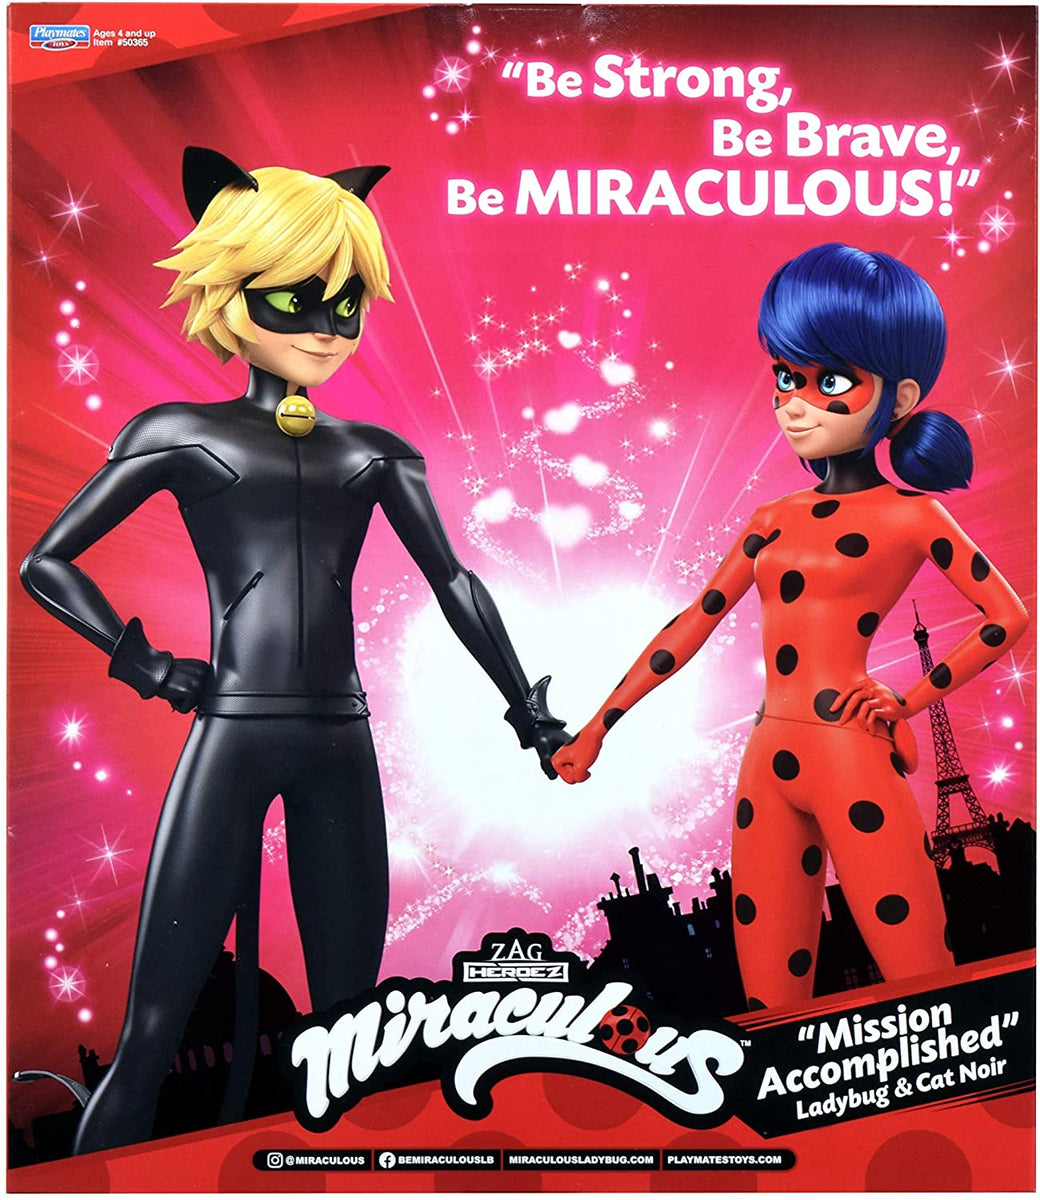 Ladybug: Pack of 2 articulated Miraculous dolls Ladybug & Cat Noir